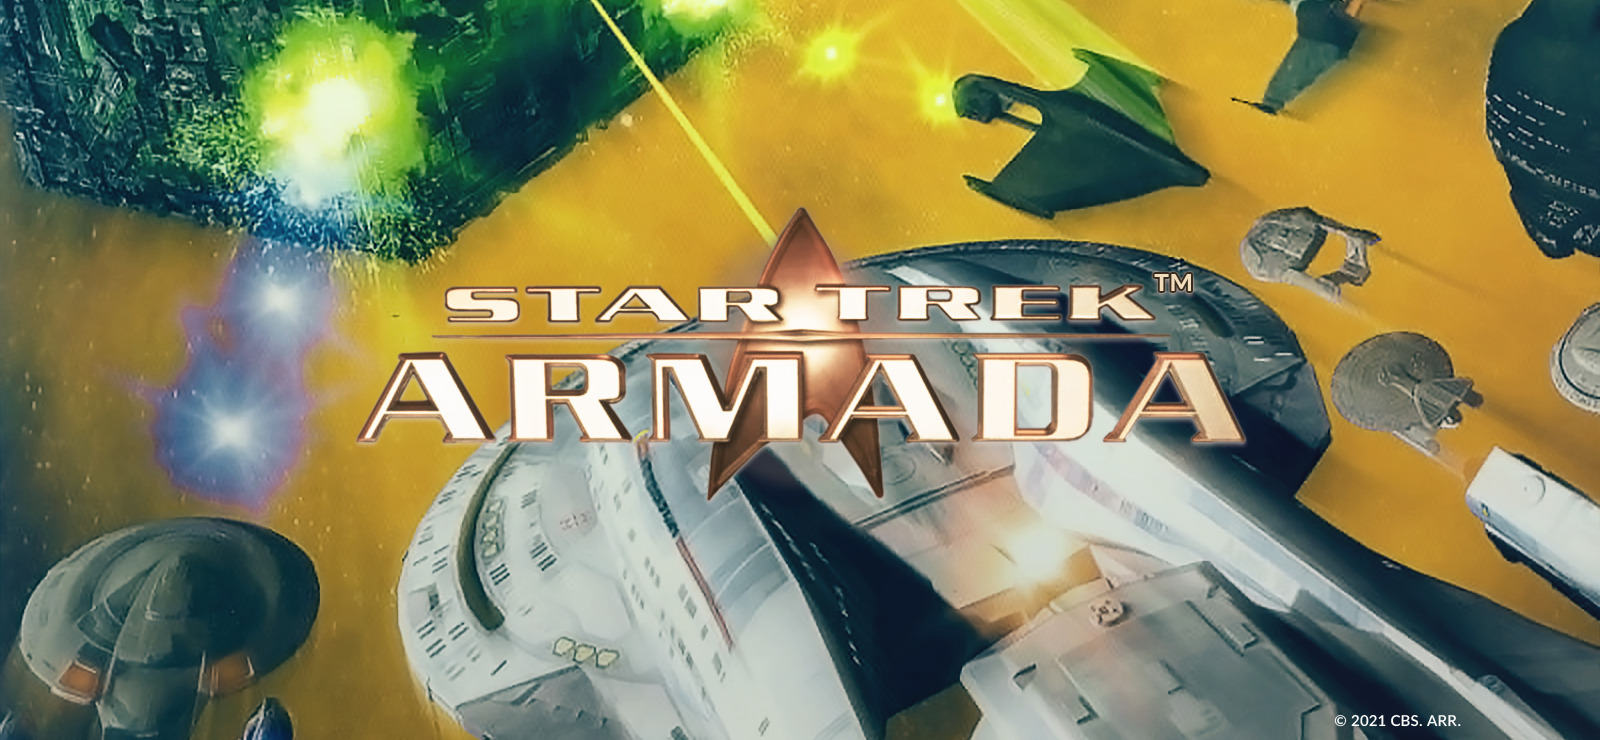 how to play star trek armada 2 on windows 7